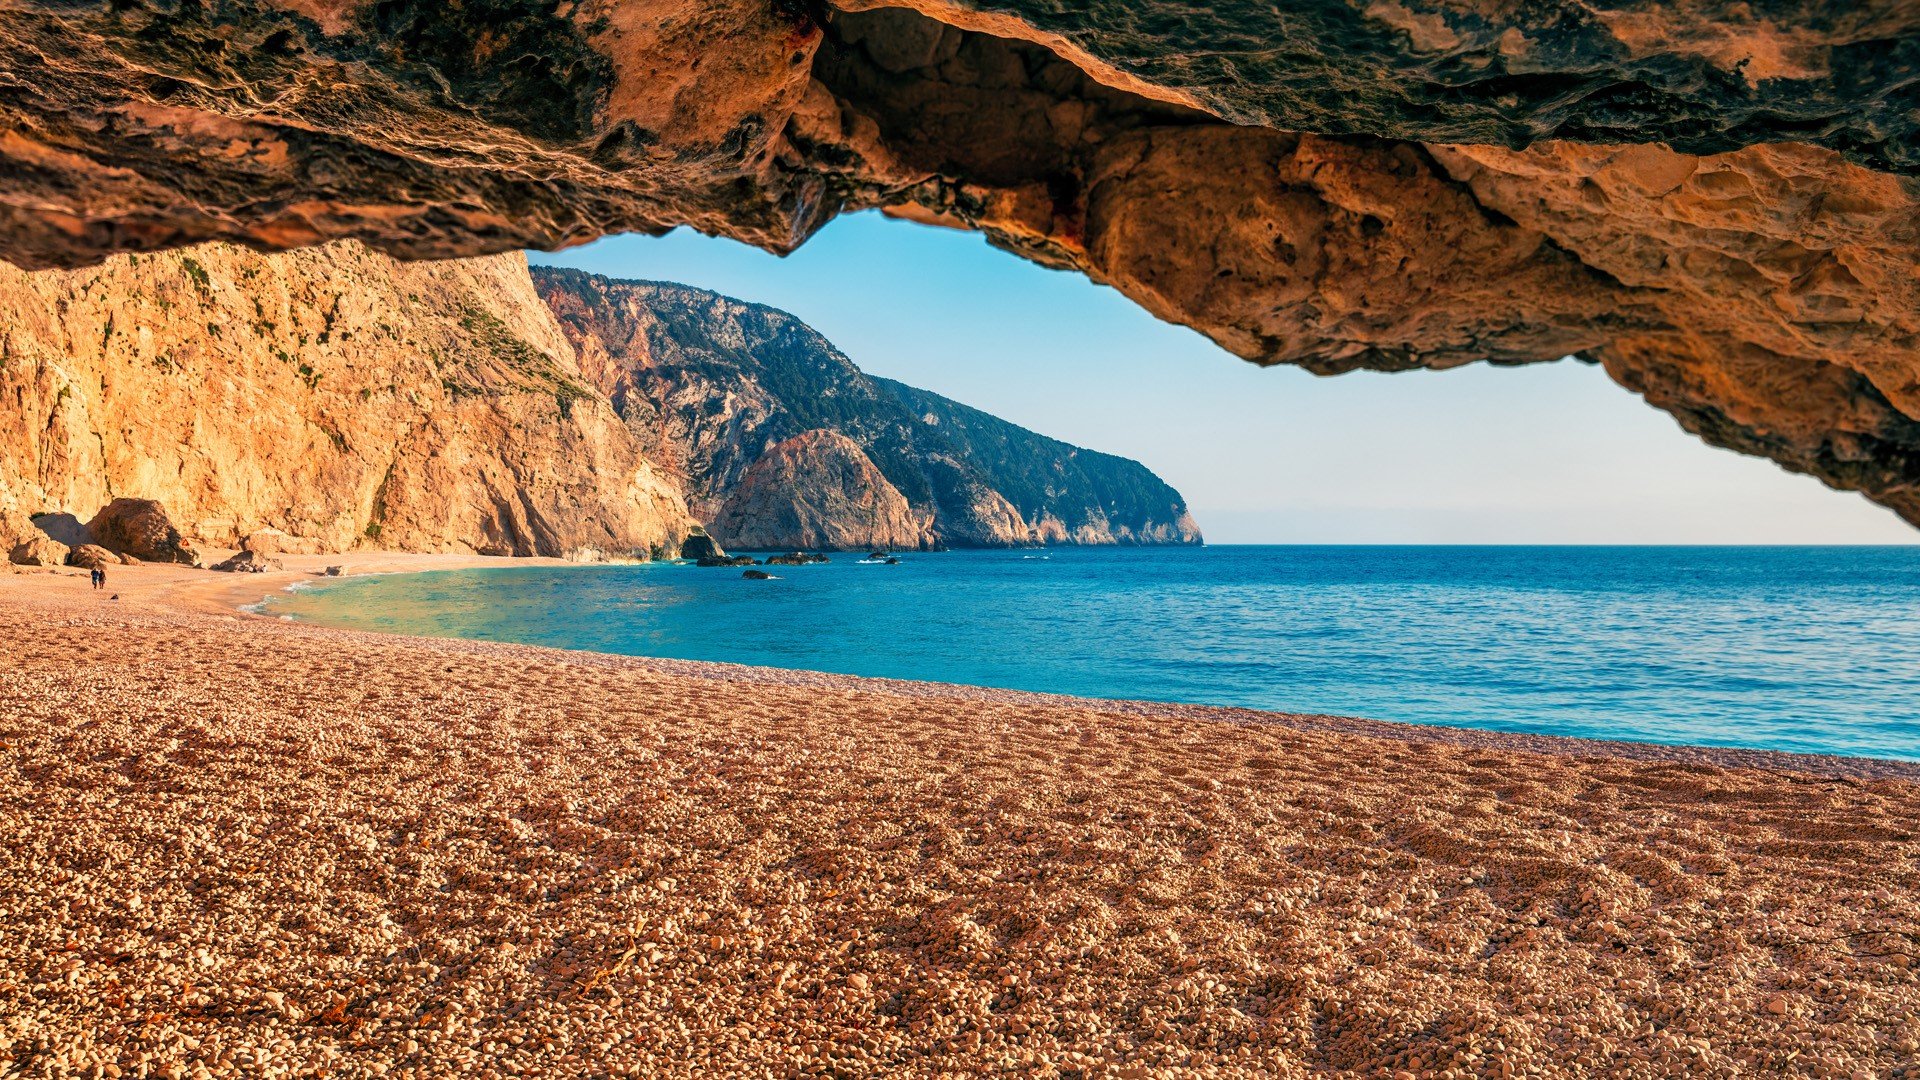 Spring morning view of Porto Katsiki Beach on Lefkada Island, Ionian Sea, Greece. Windows 10 Spotlight Image